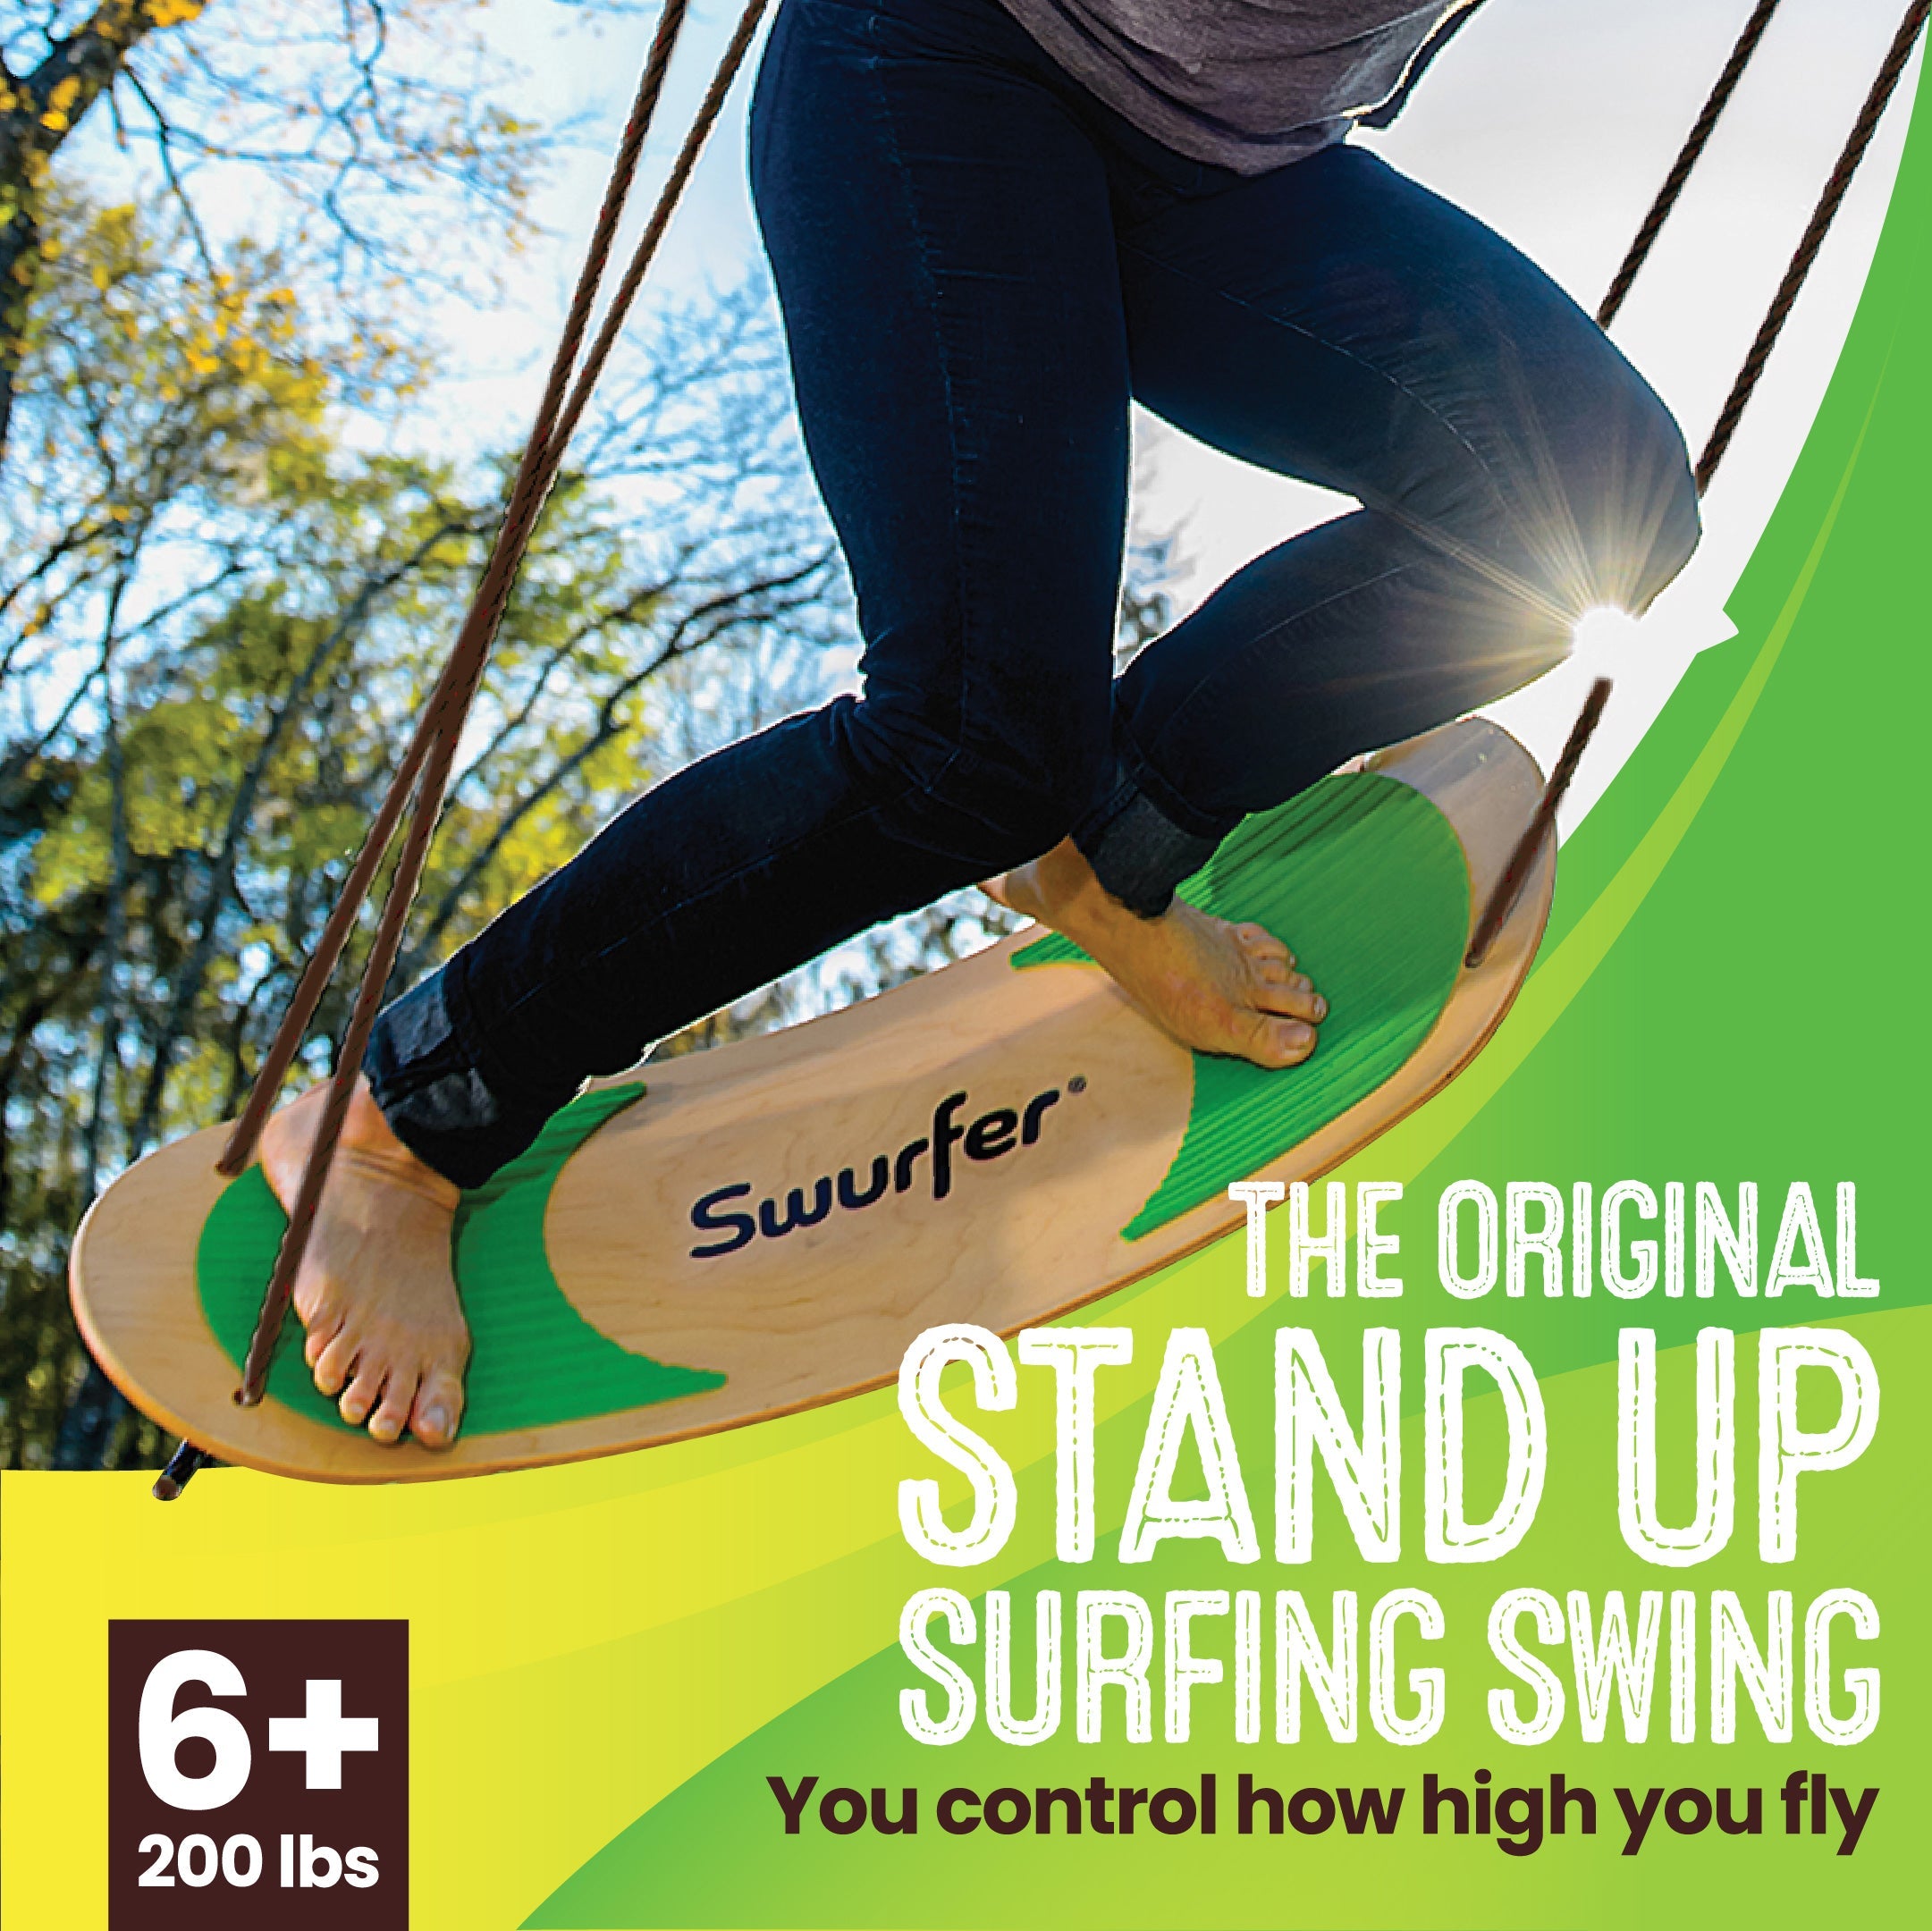 Swurfer Original Stand Up Surfing Tree Swing